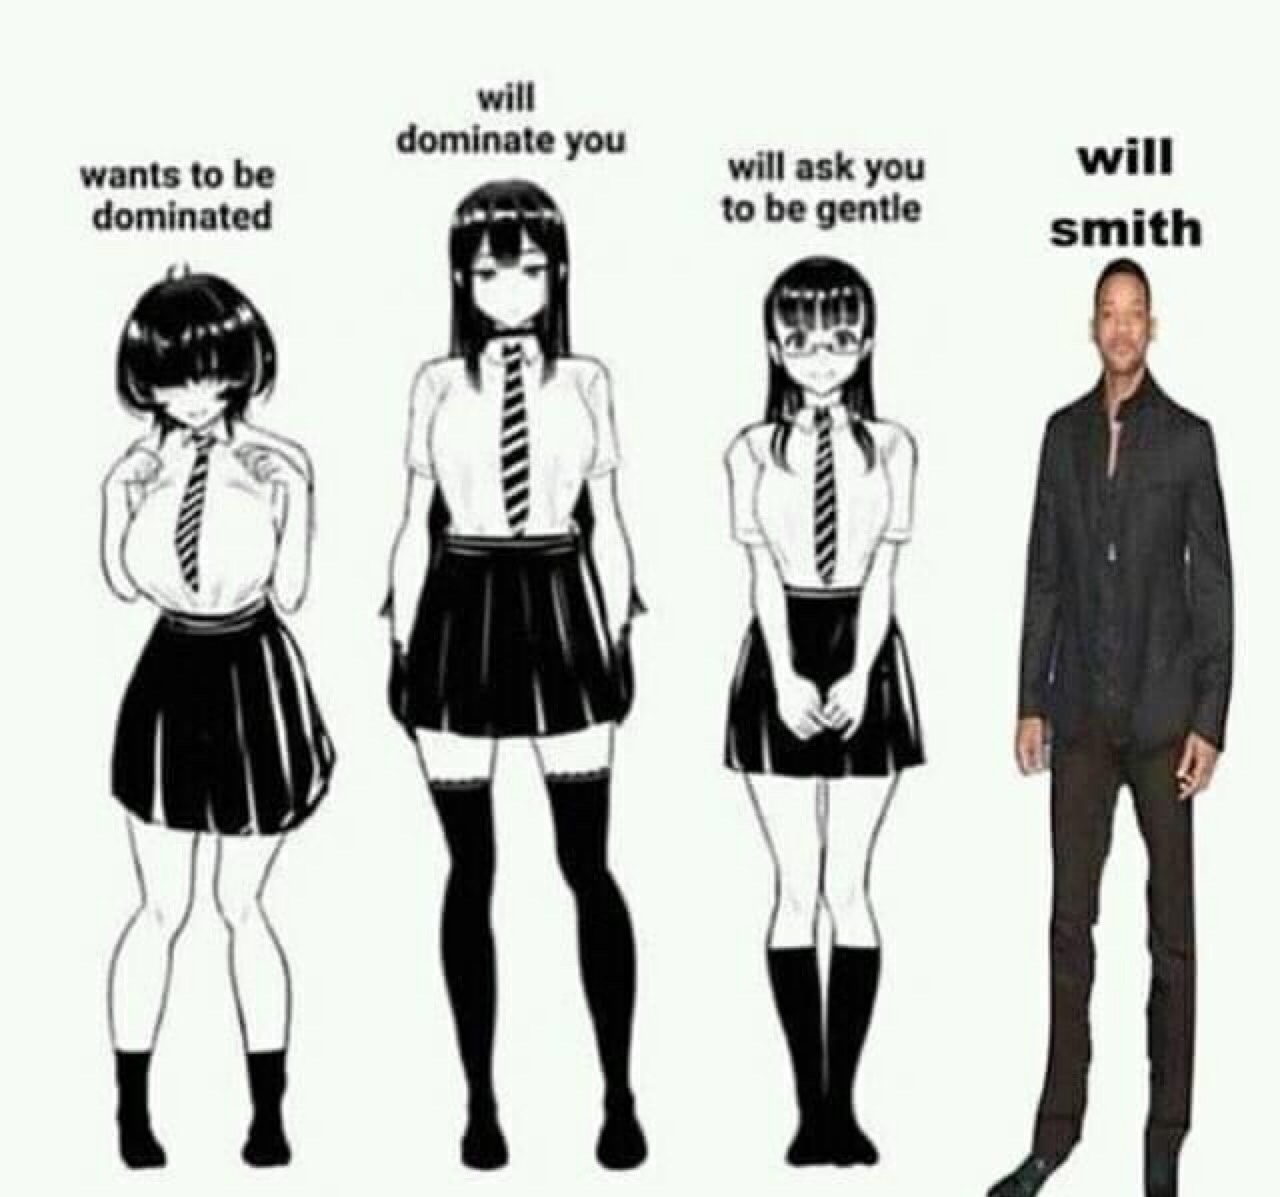 will will smith smith - meme